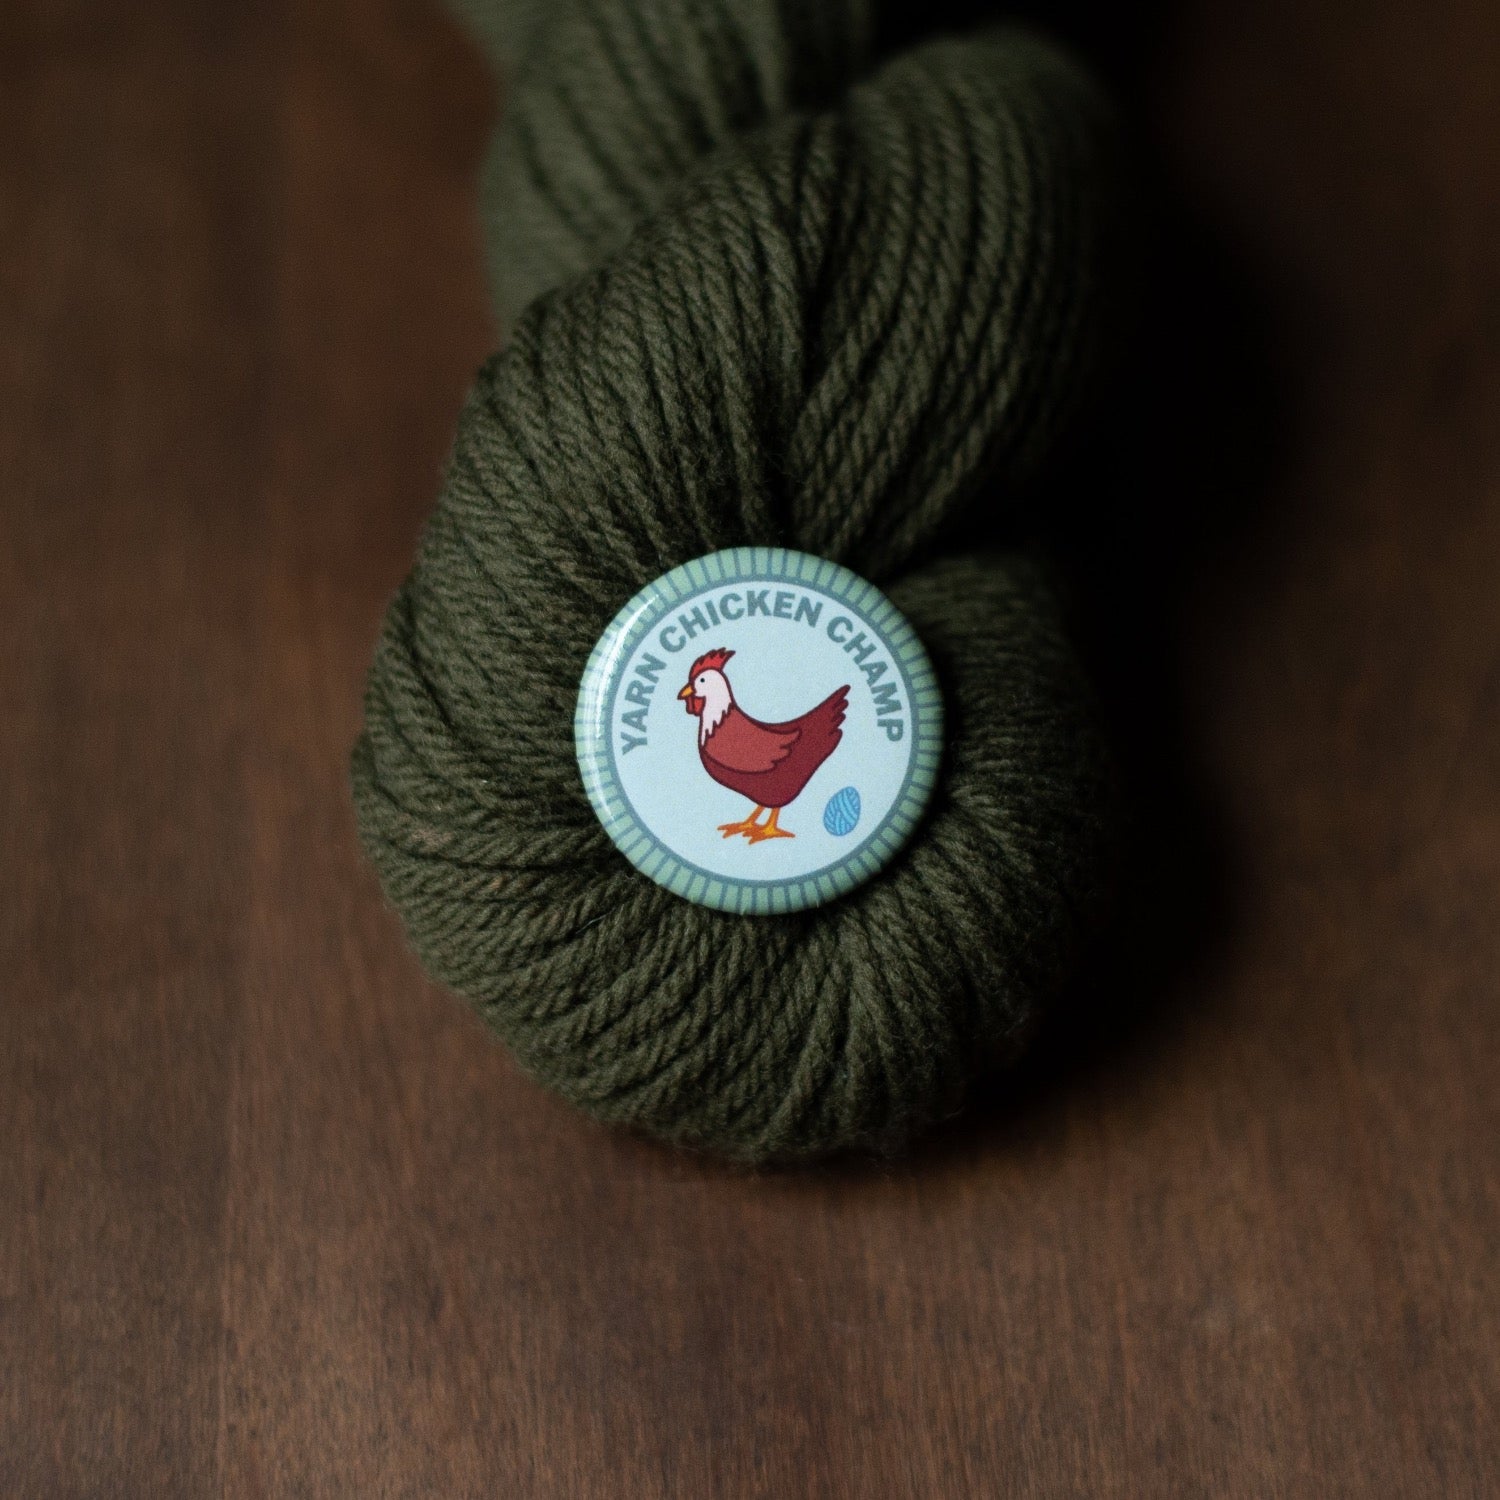 Yarn Chicken Champ knitting merit badge